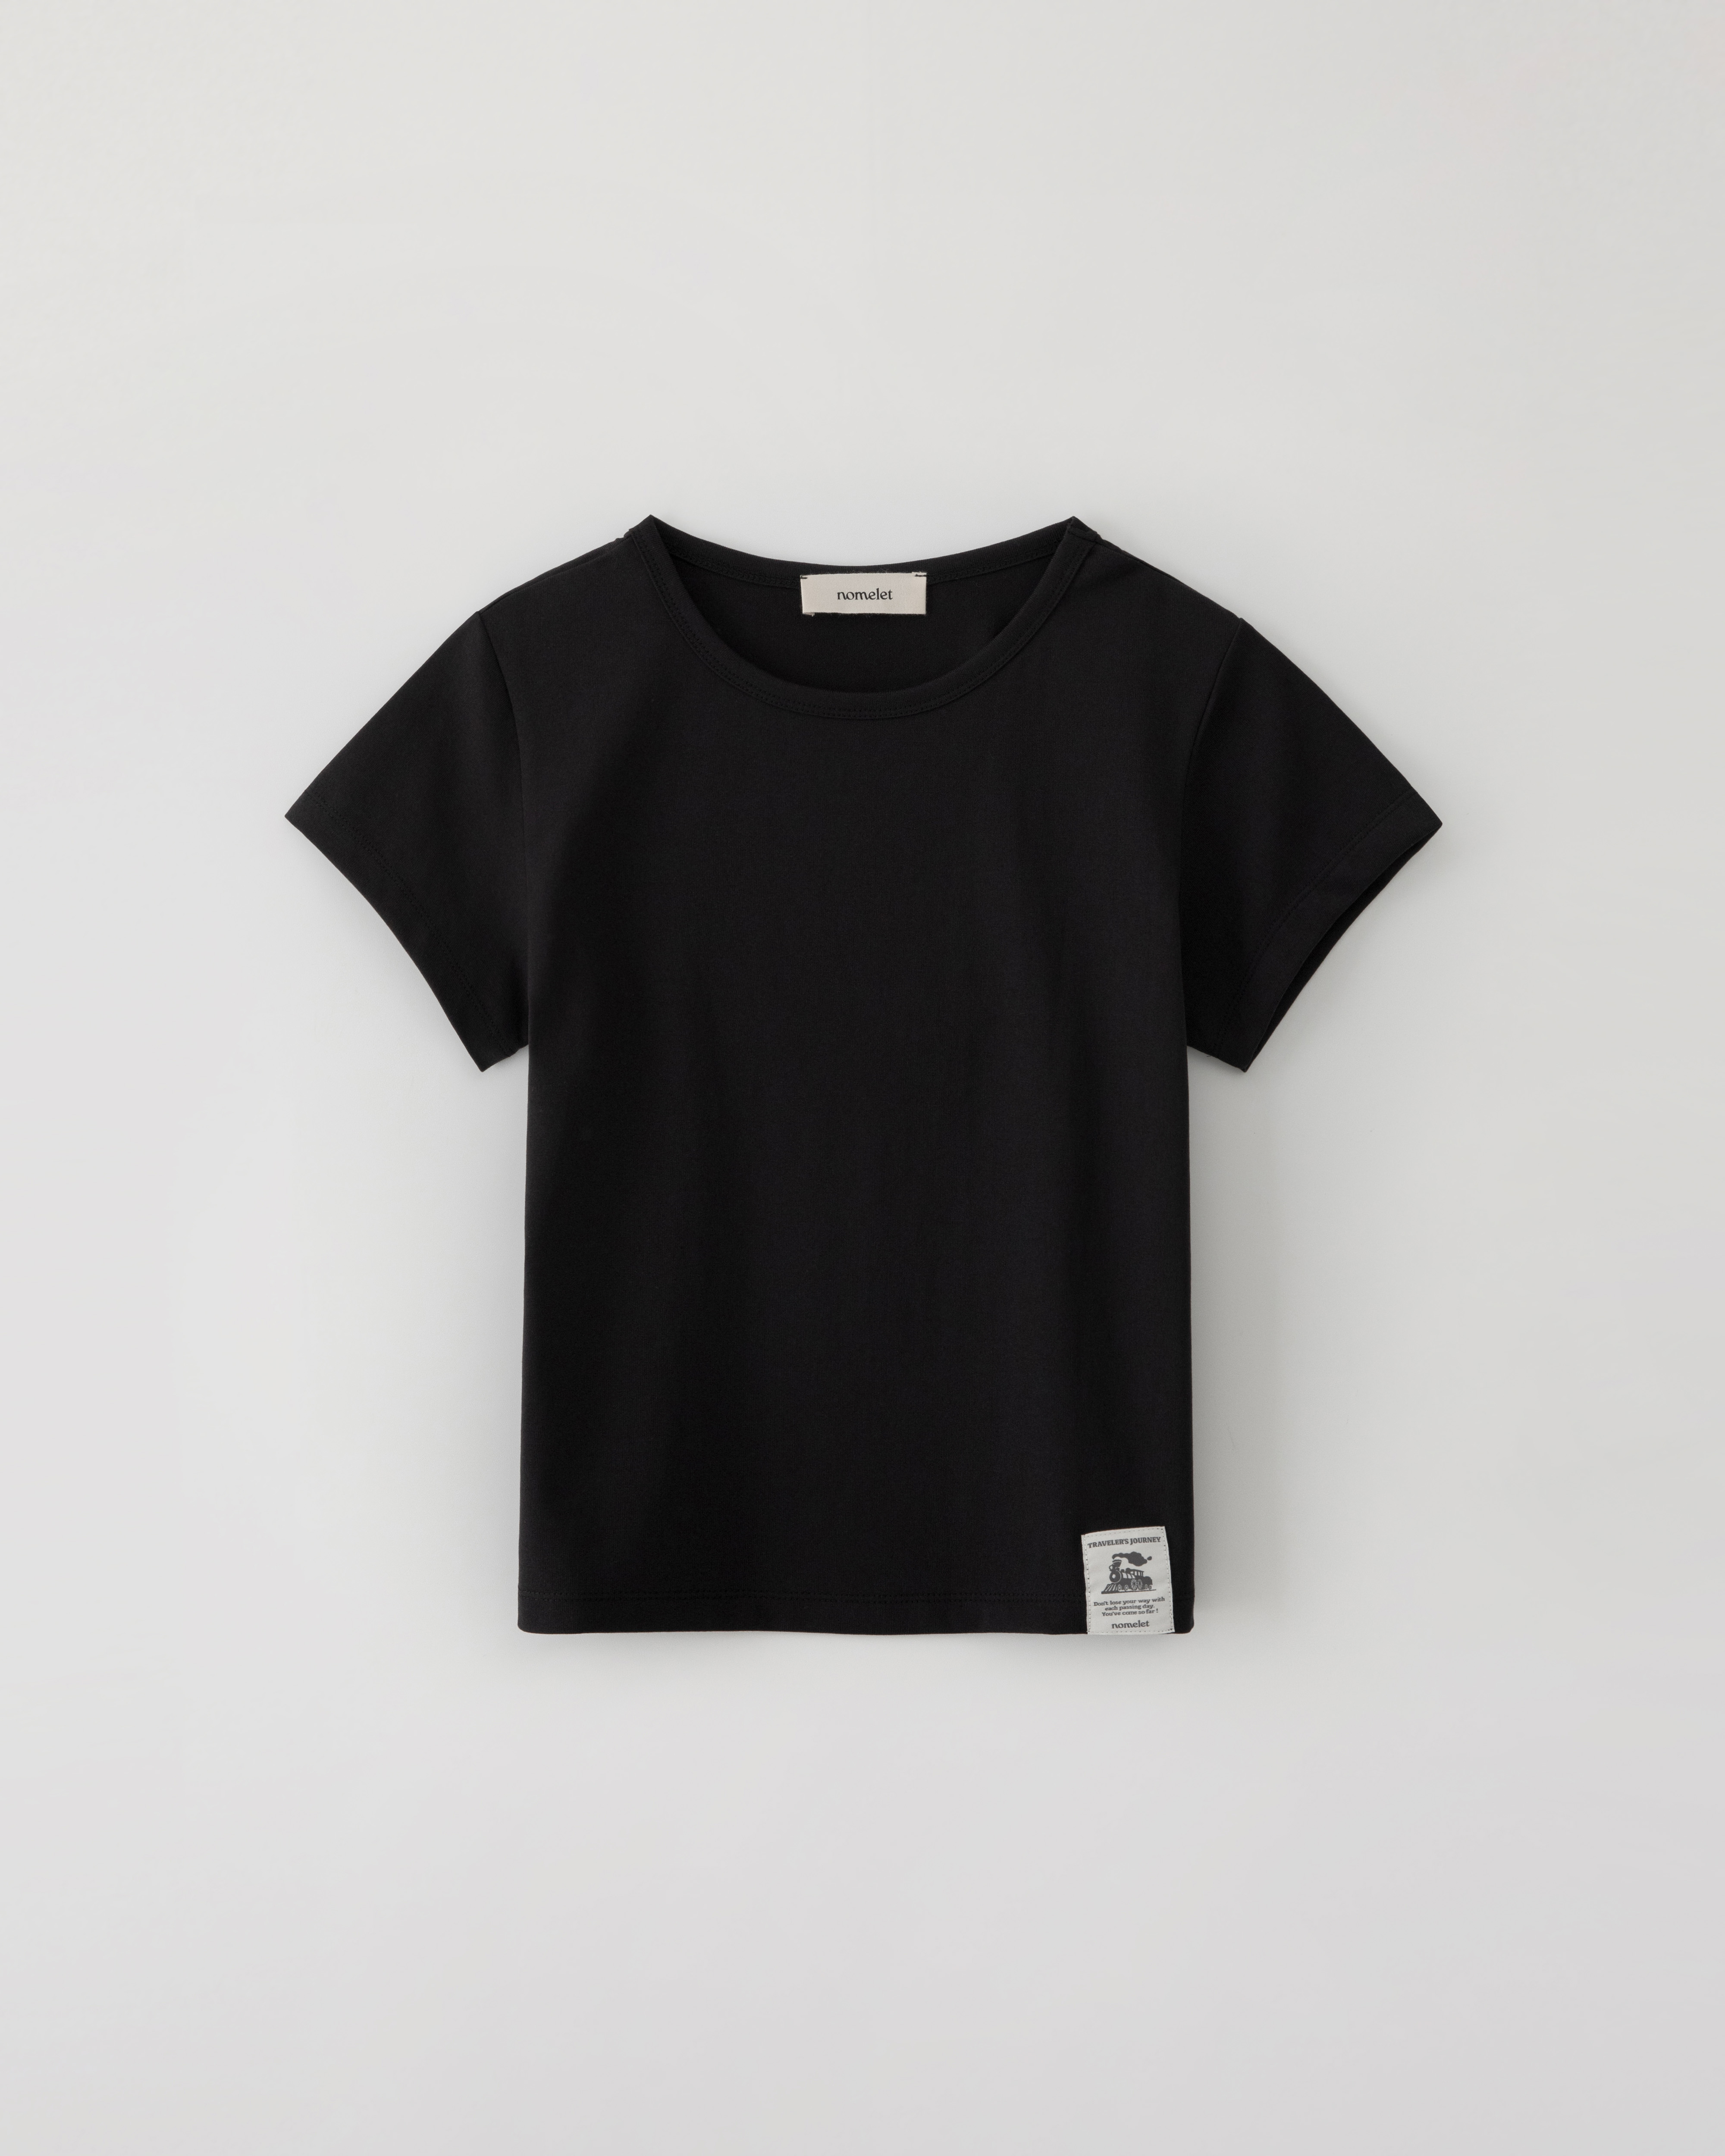 Train slim t-shirt - black